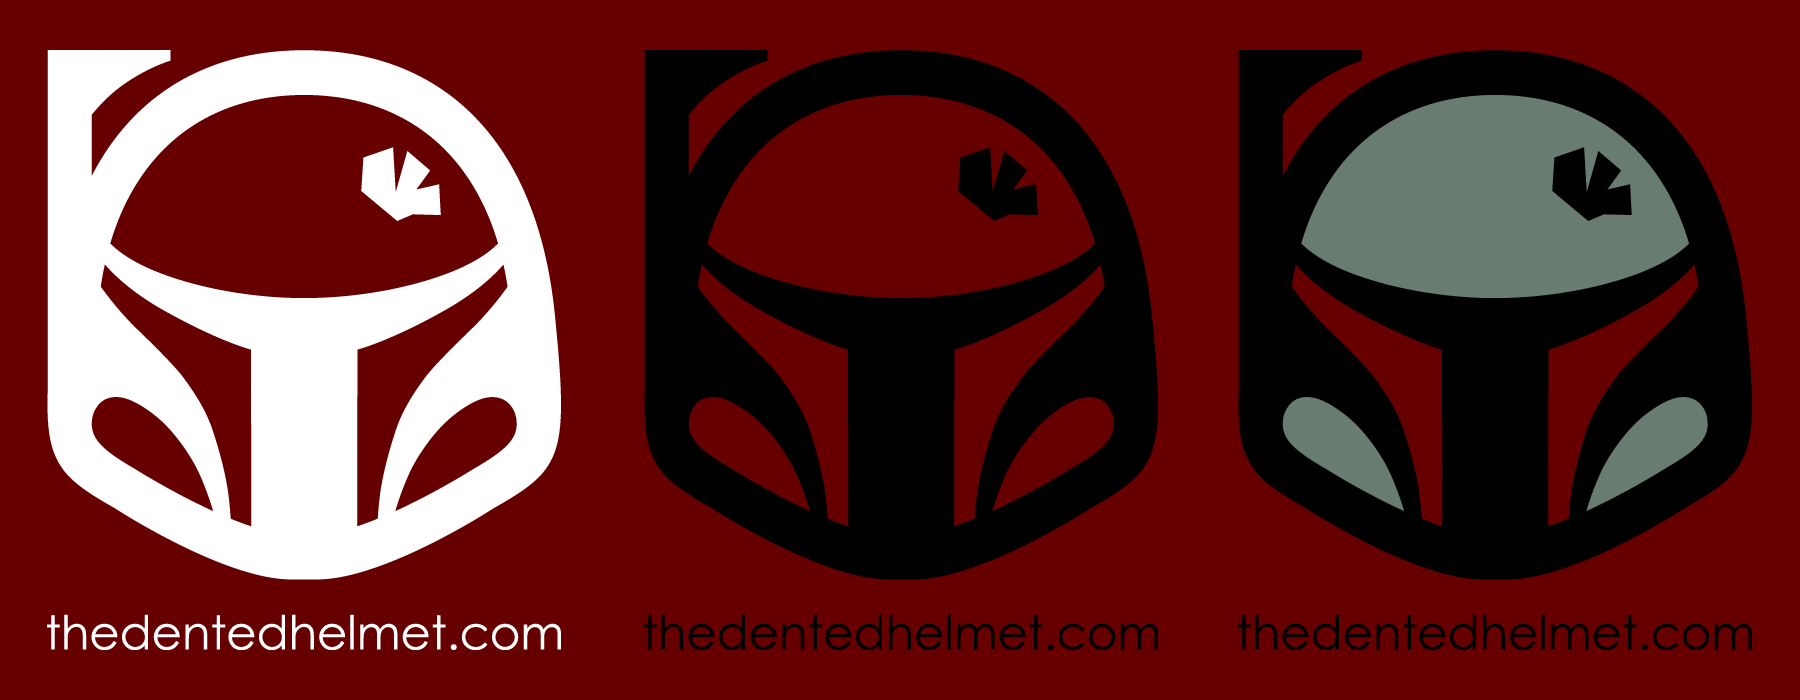 new_tdh_logo.png